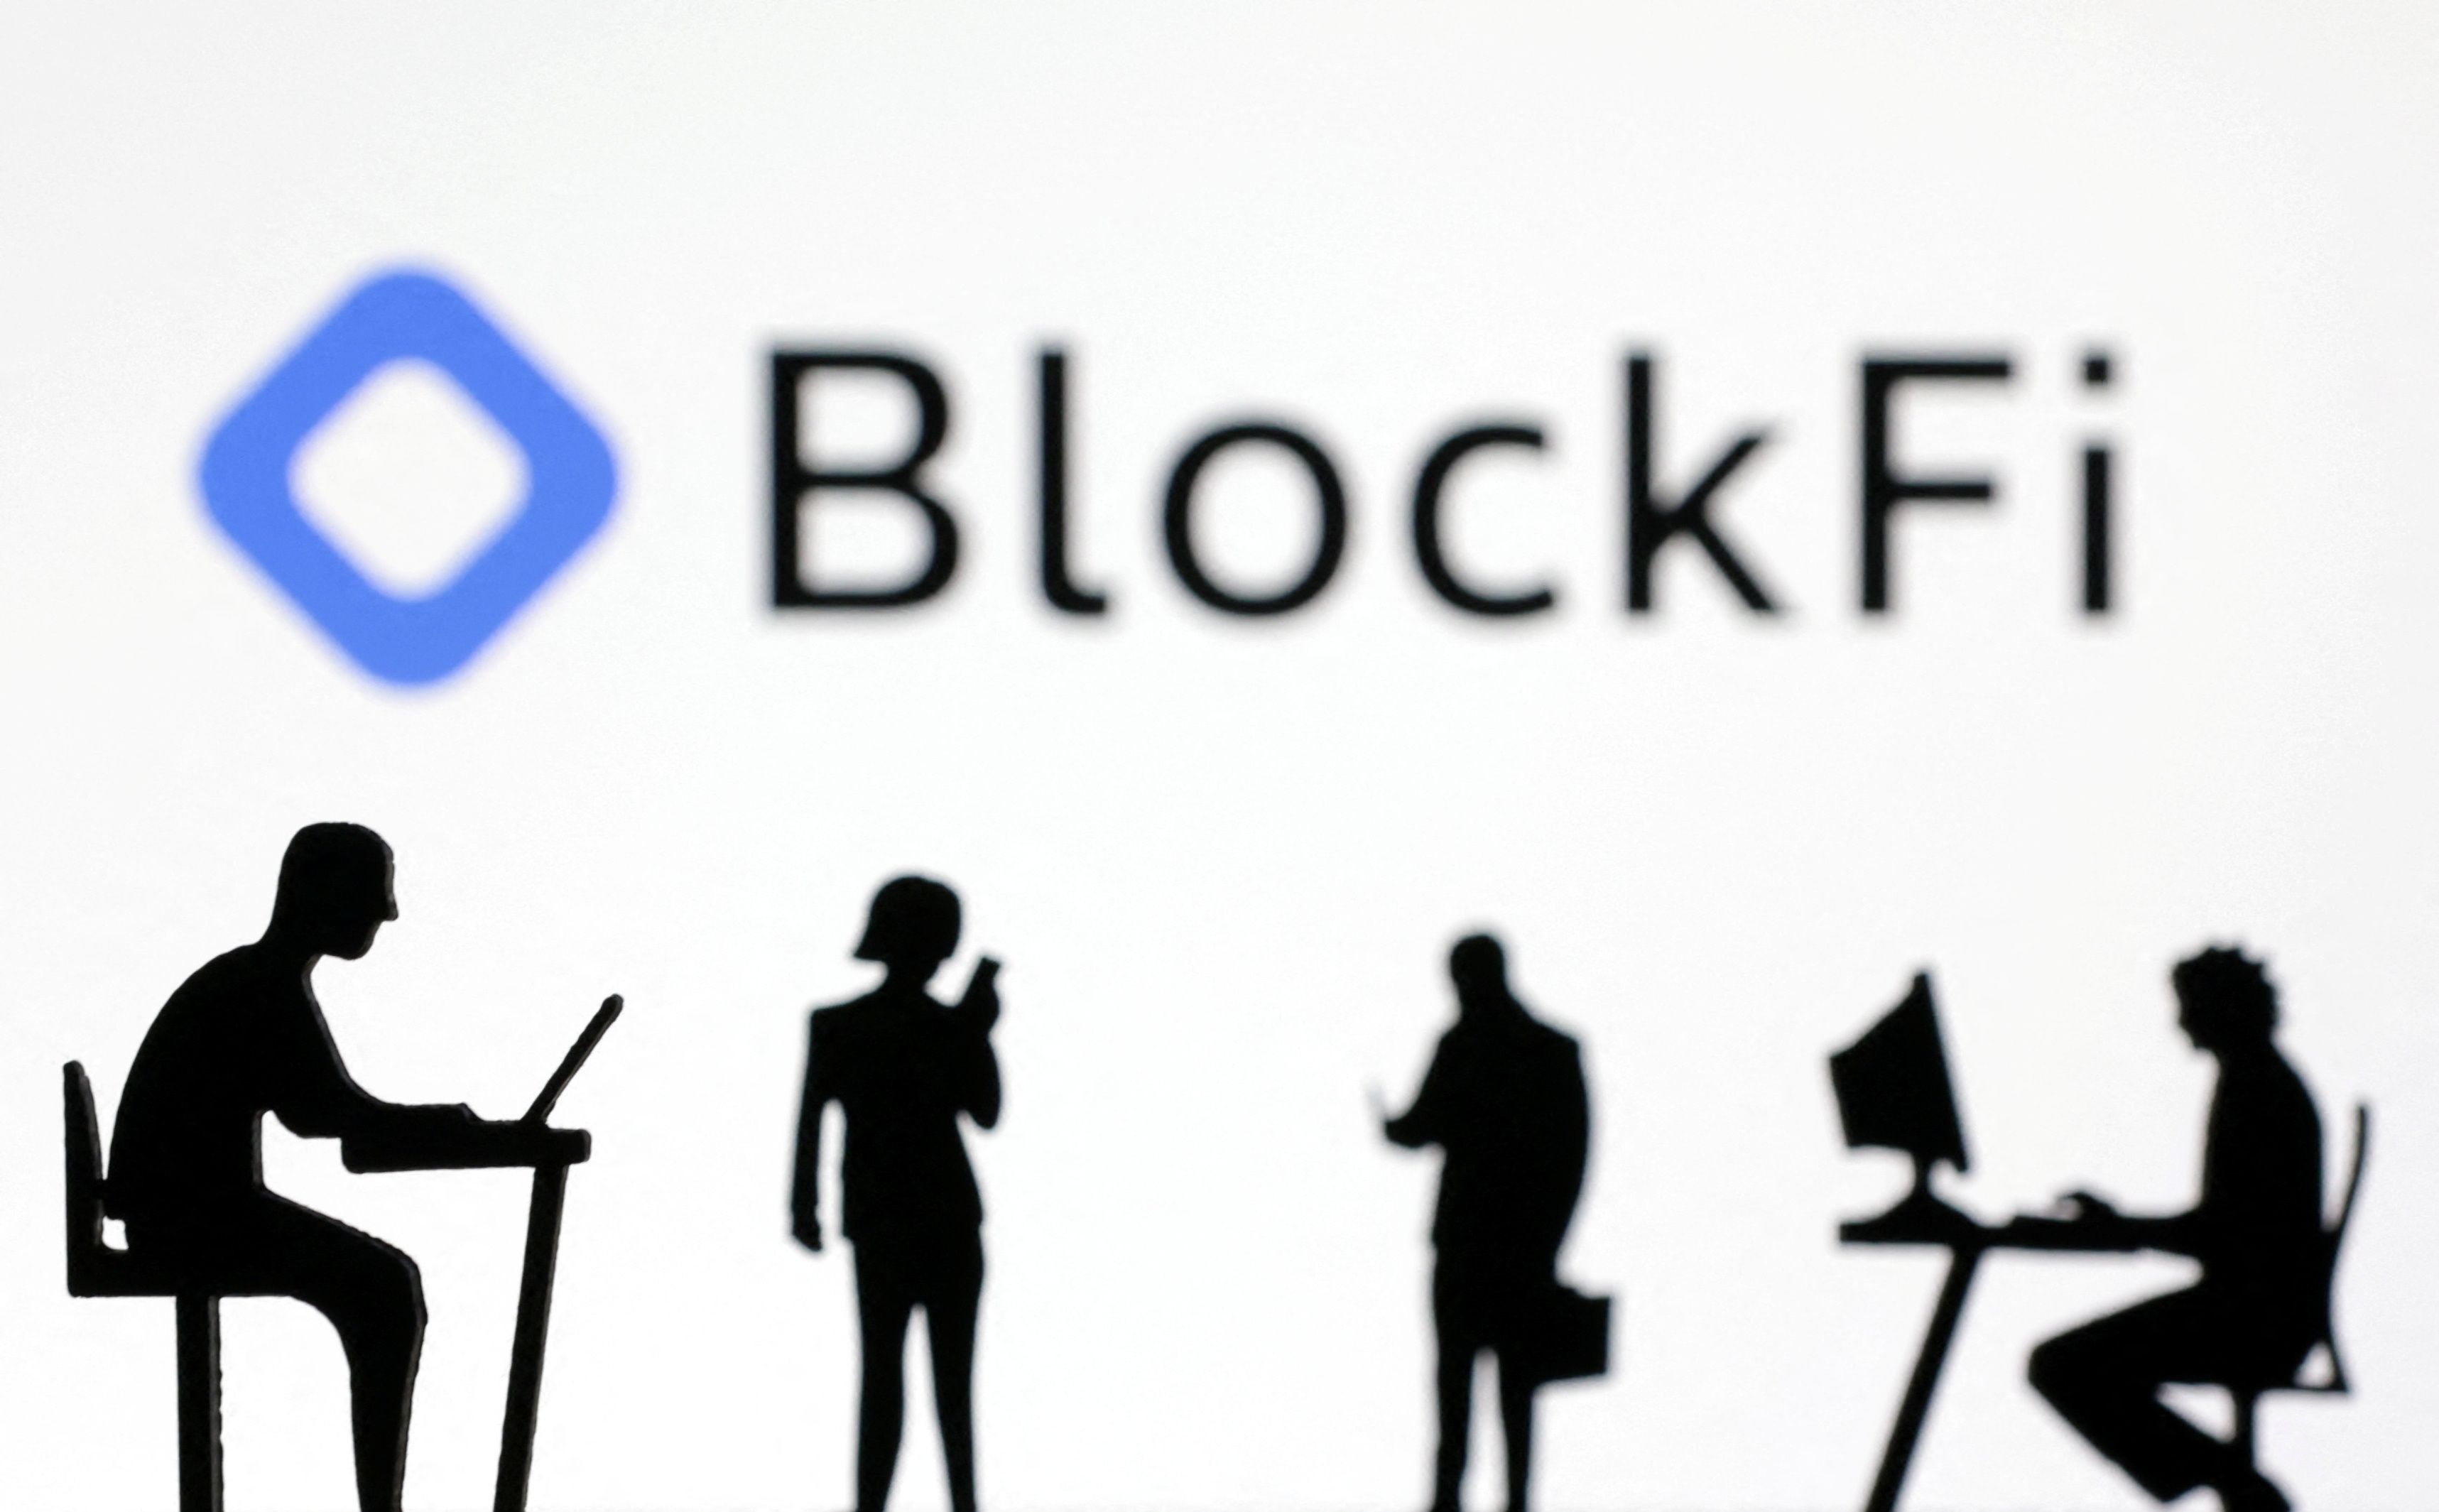 Illustration showing the BlockFi logo